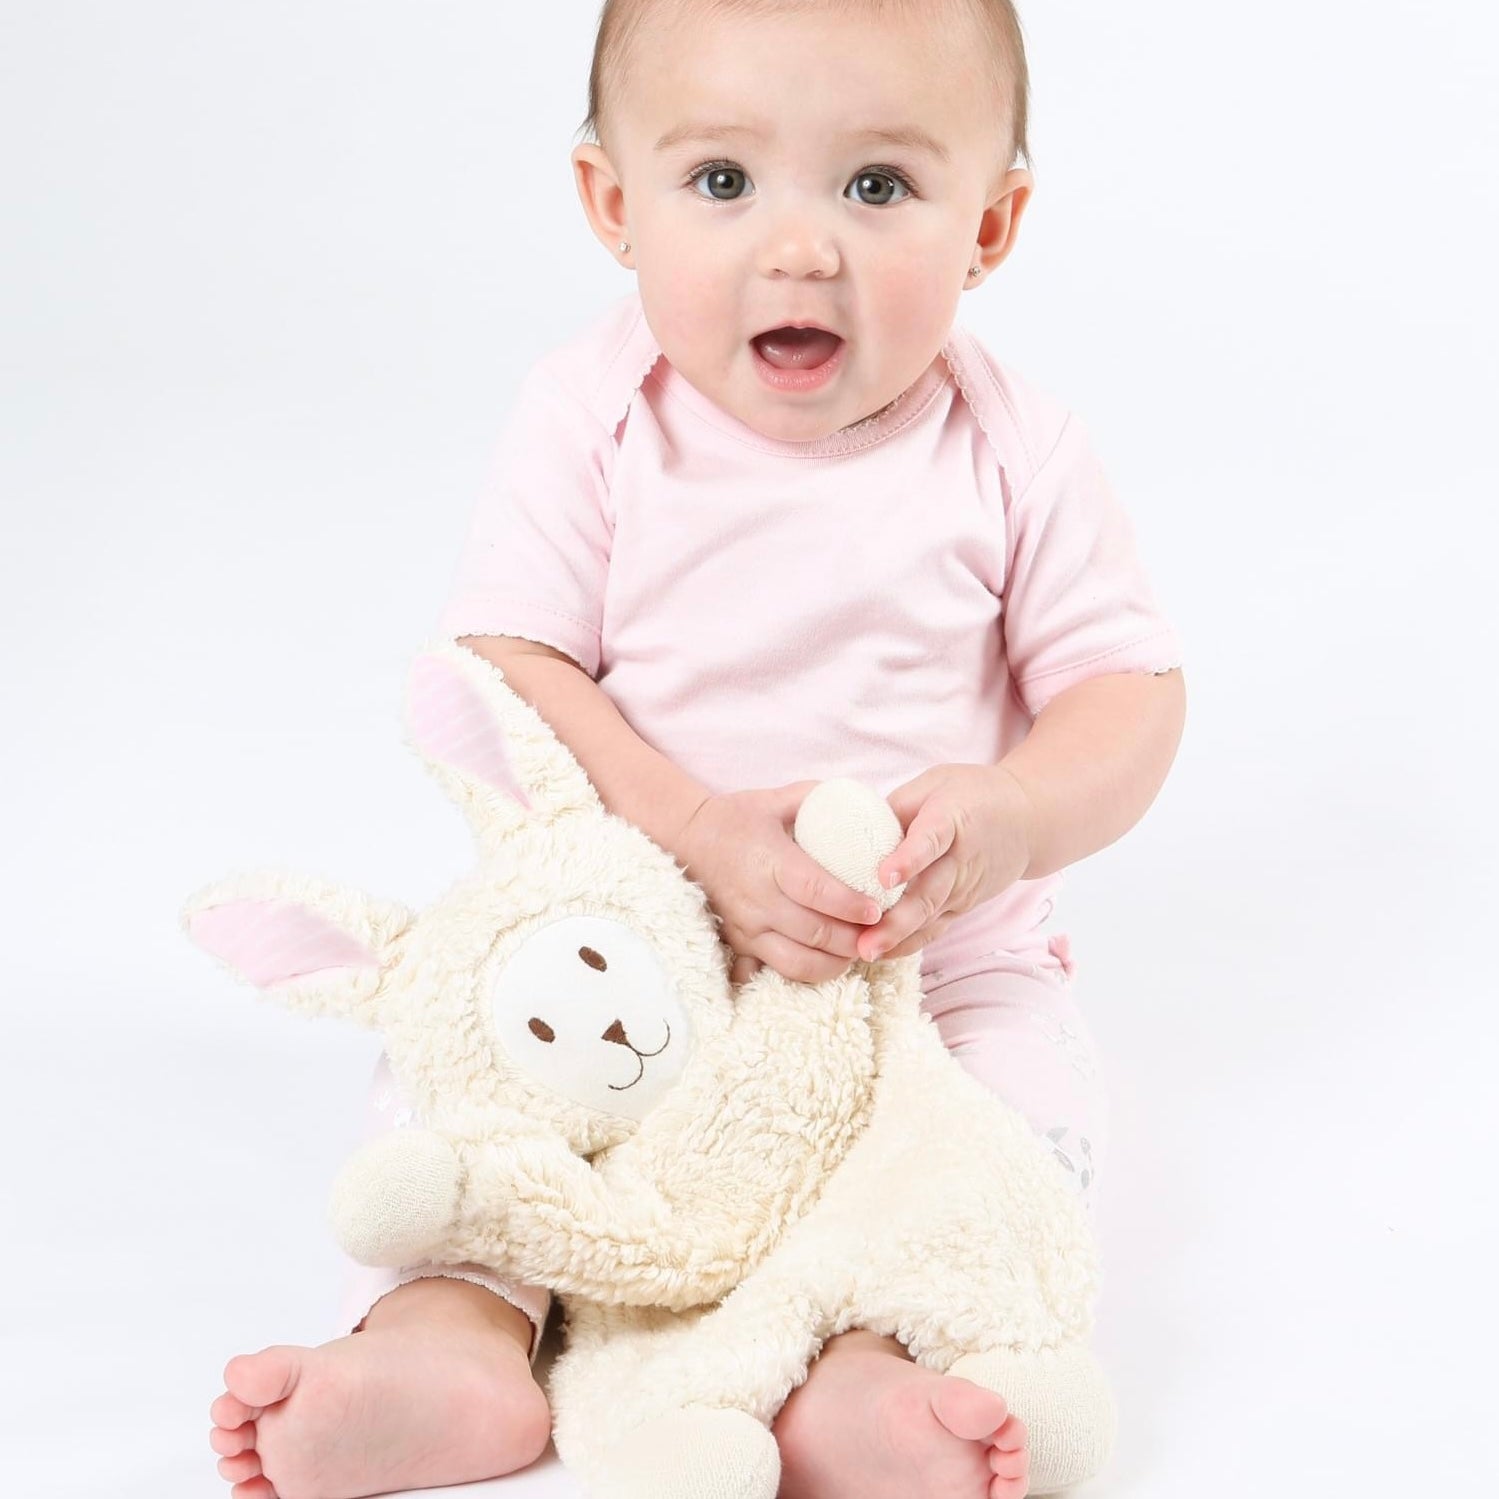 Baby with organic stuffed bunny toy 